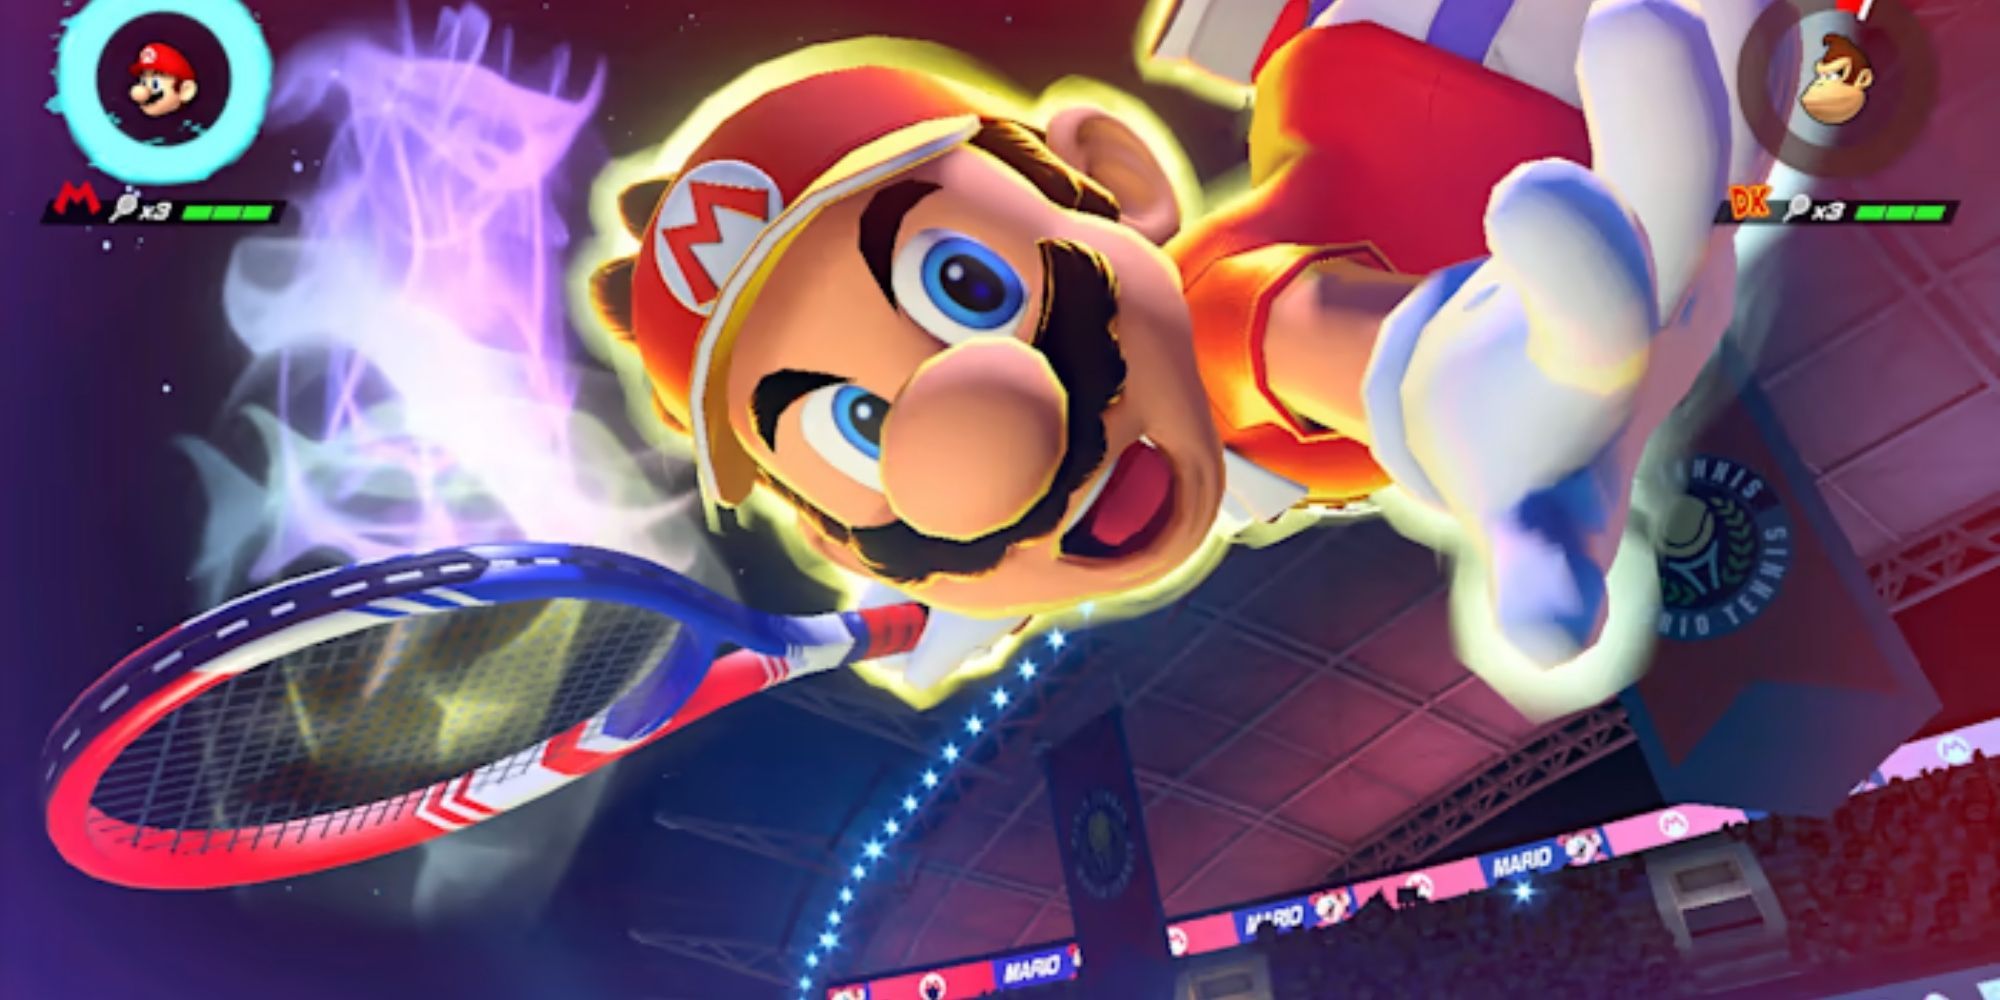 Mario Tennis Mario prepares to take a power shot